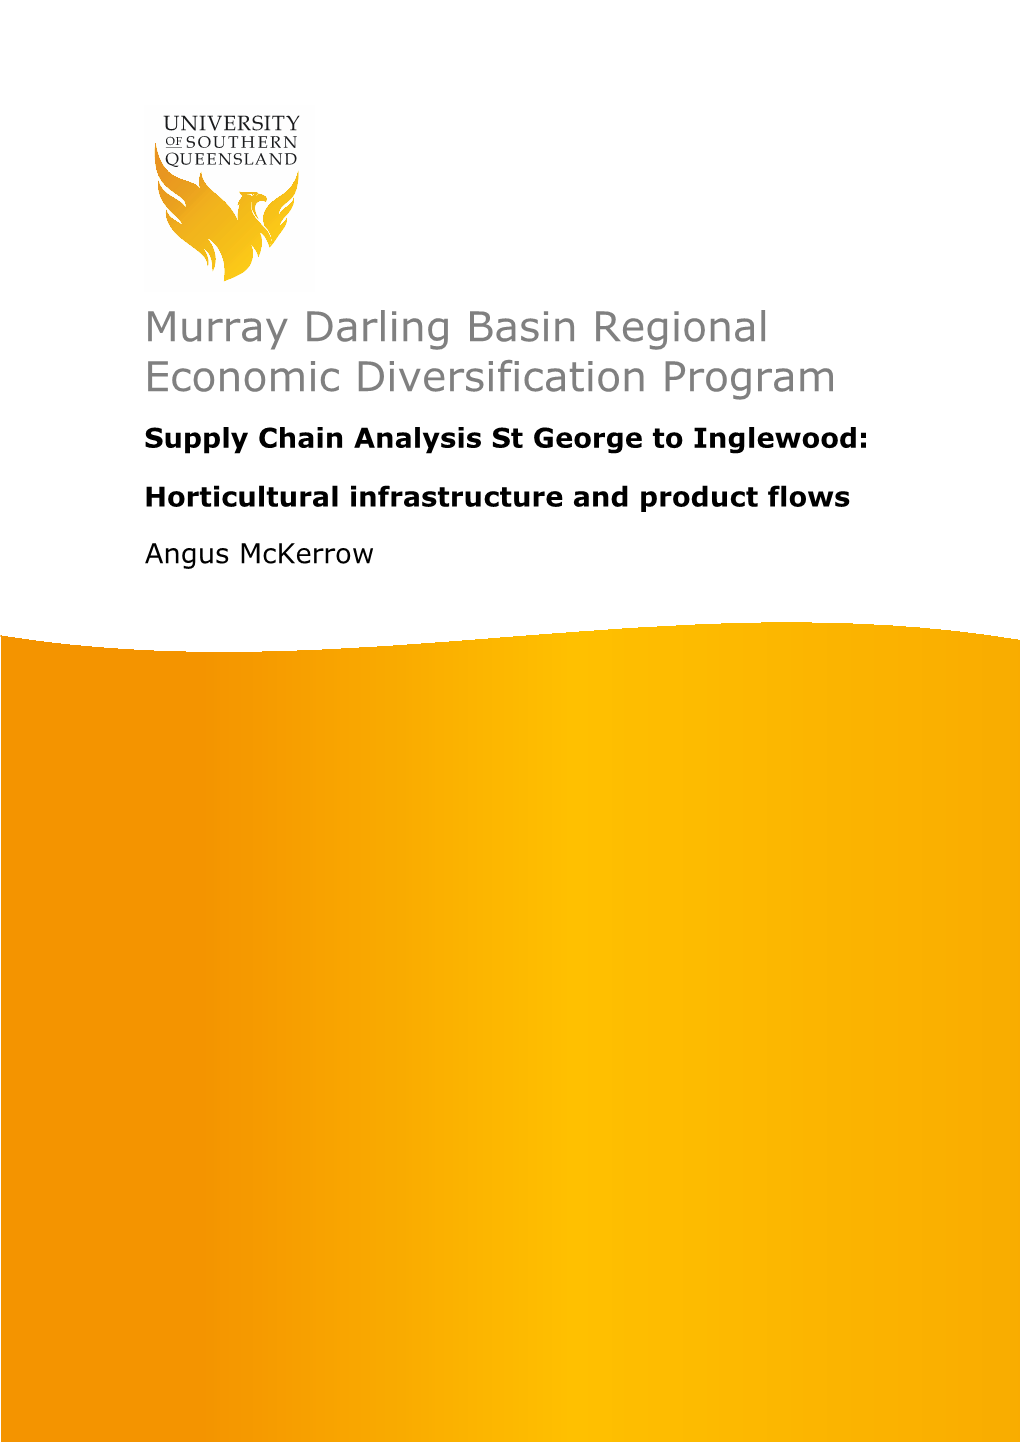 Supply Chain Analysis St George to Inglewood